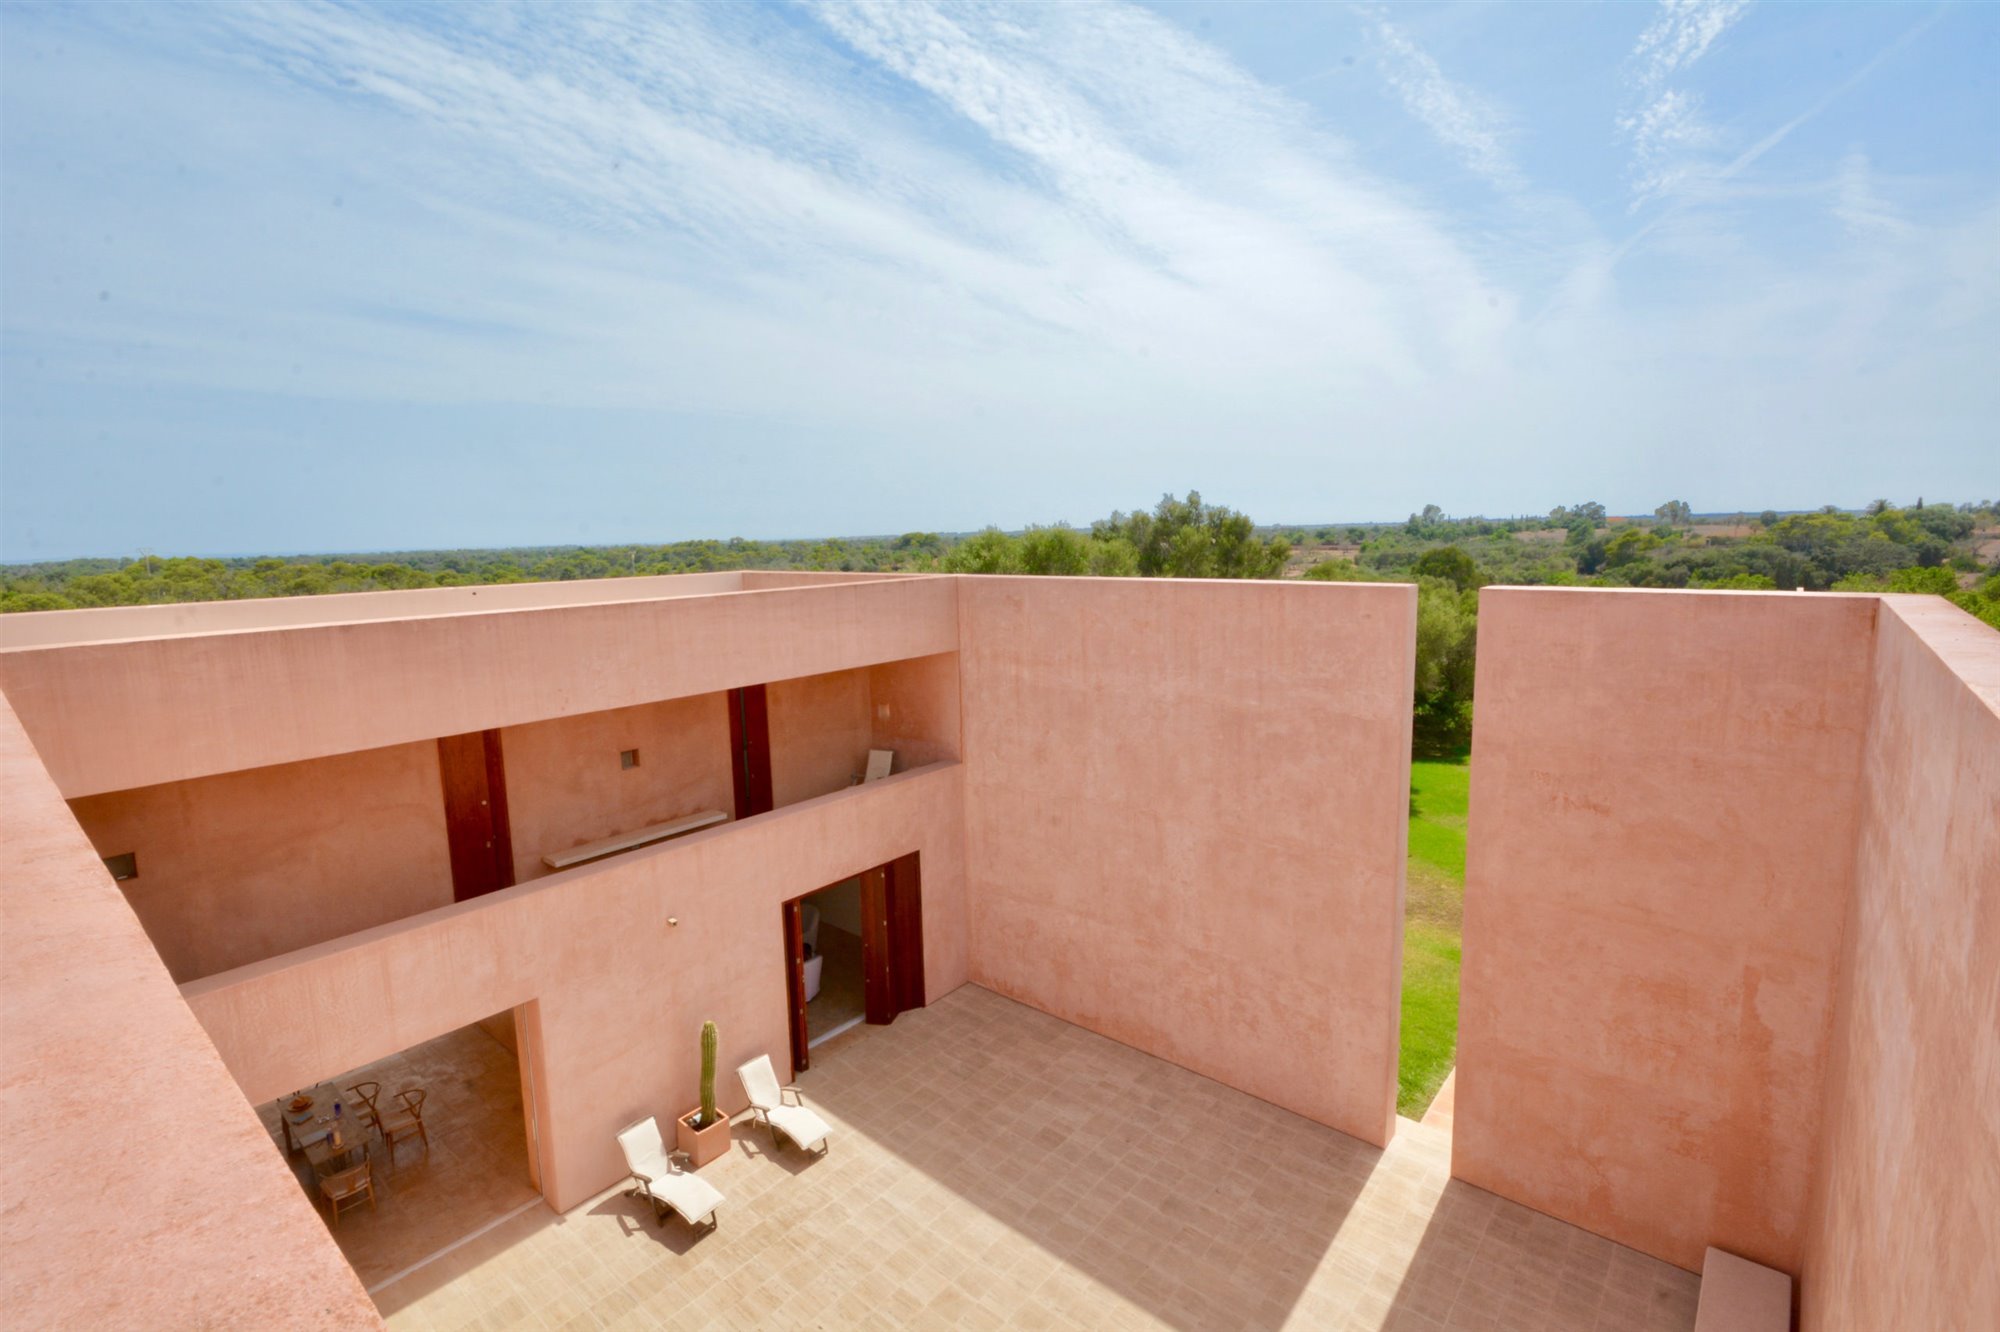 Casa de color rosa de claudio Silvestrin y John pawson en Mallorca vista aerea